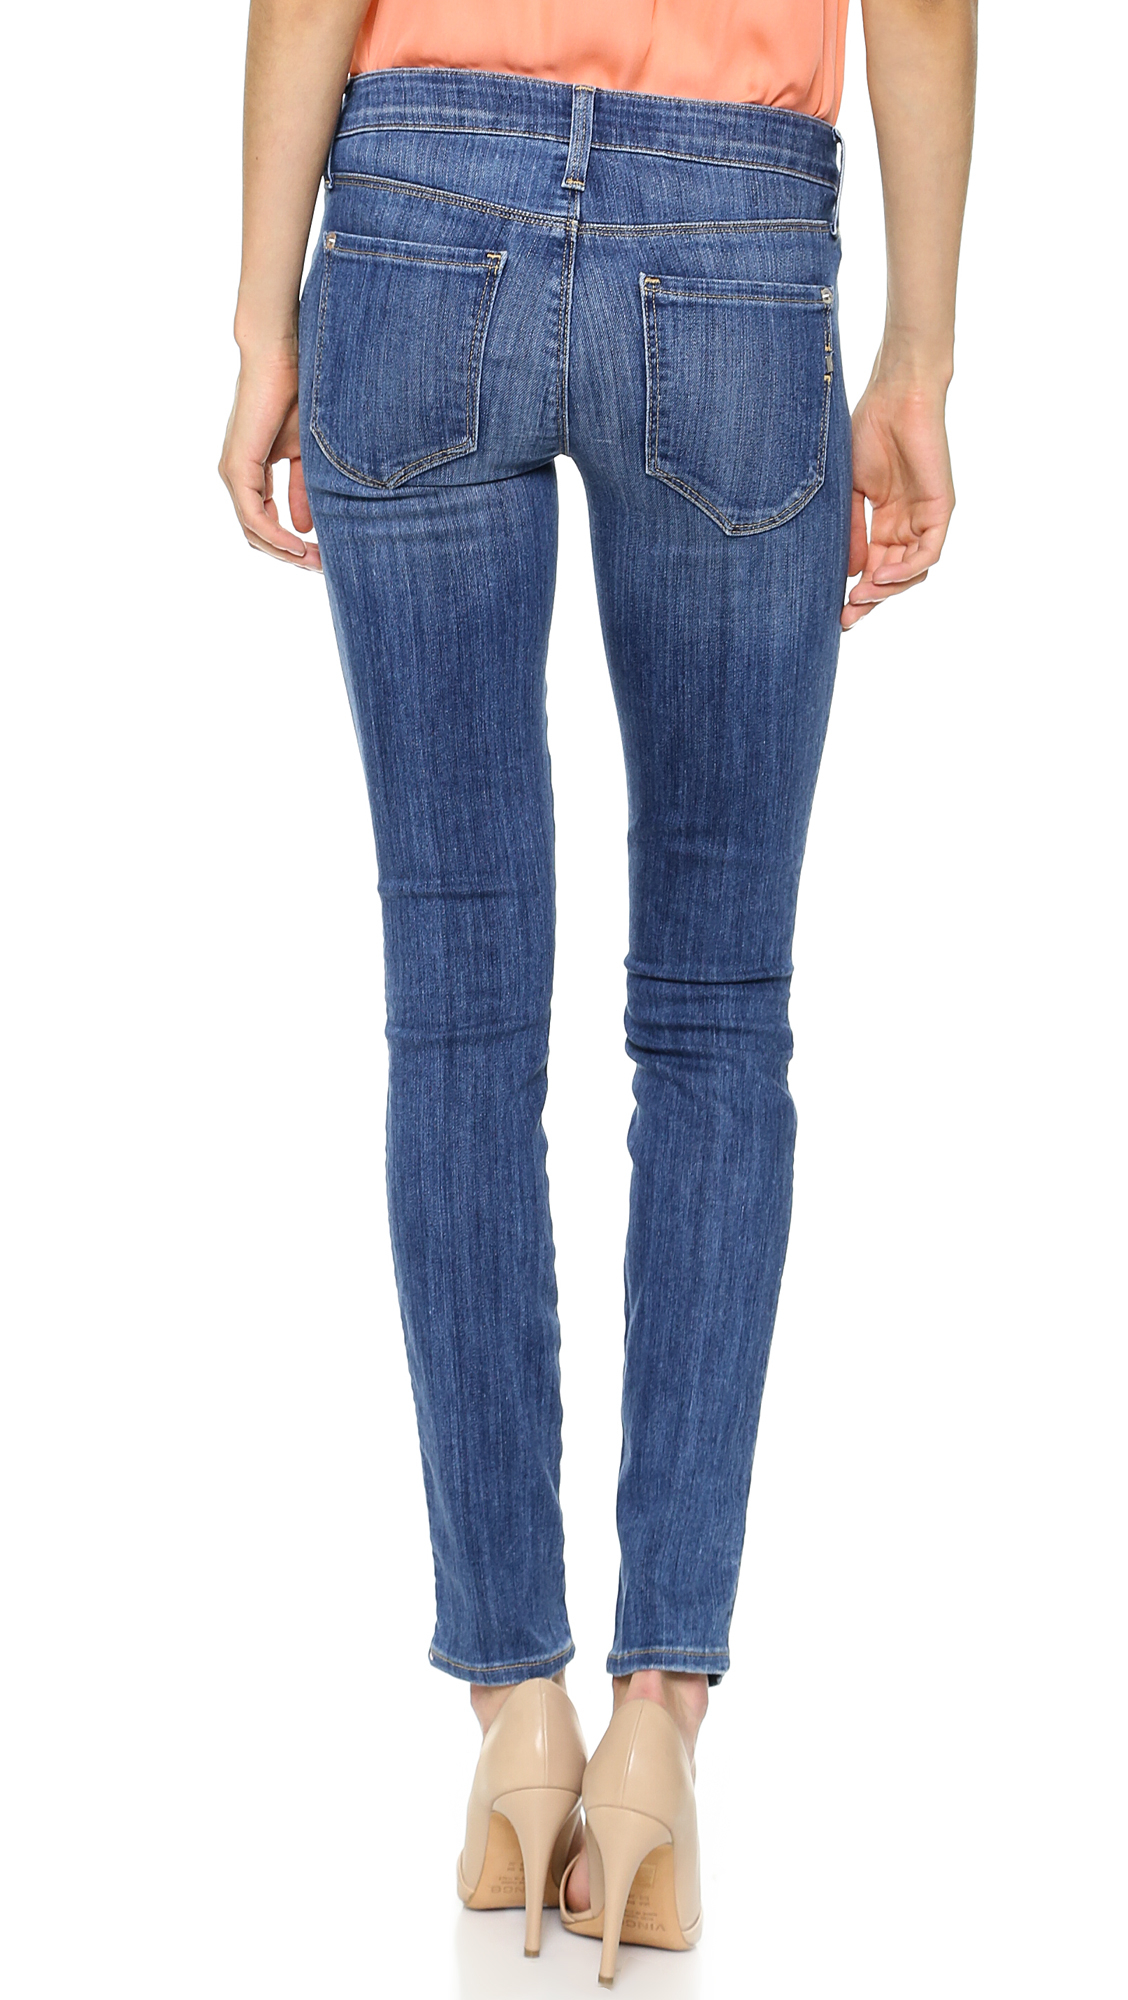 Lyst - Genetic Denim Shya Skinny Jeans - Complex in Blue